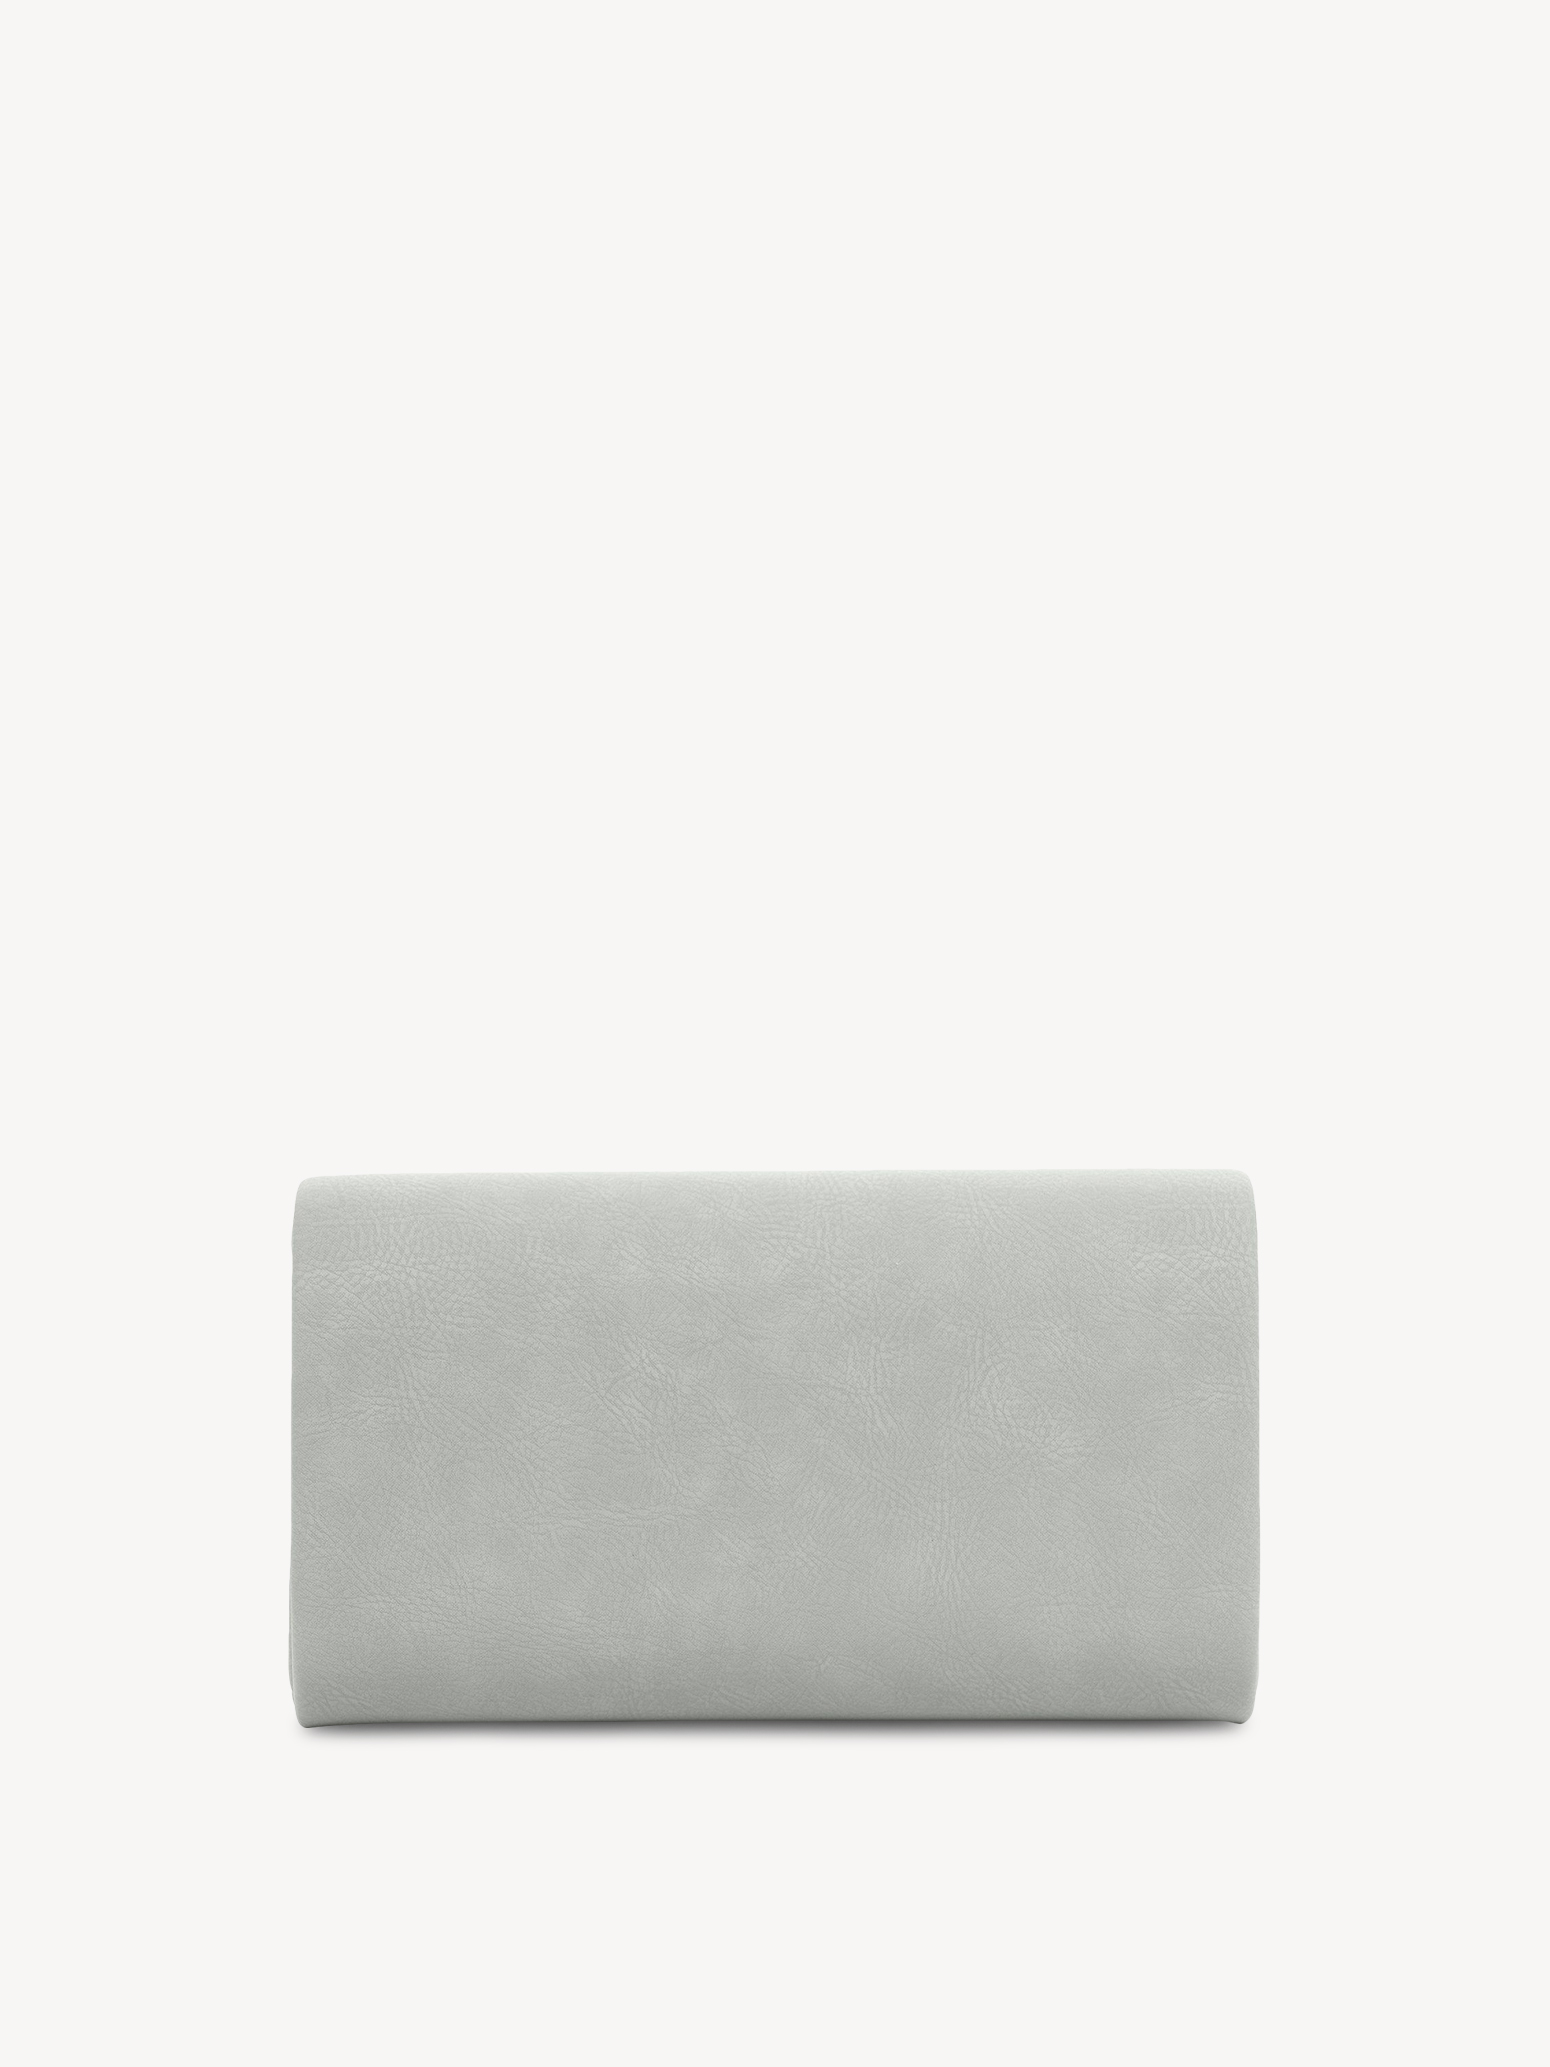 Clutch bag - white, perla, hi-res